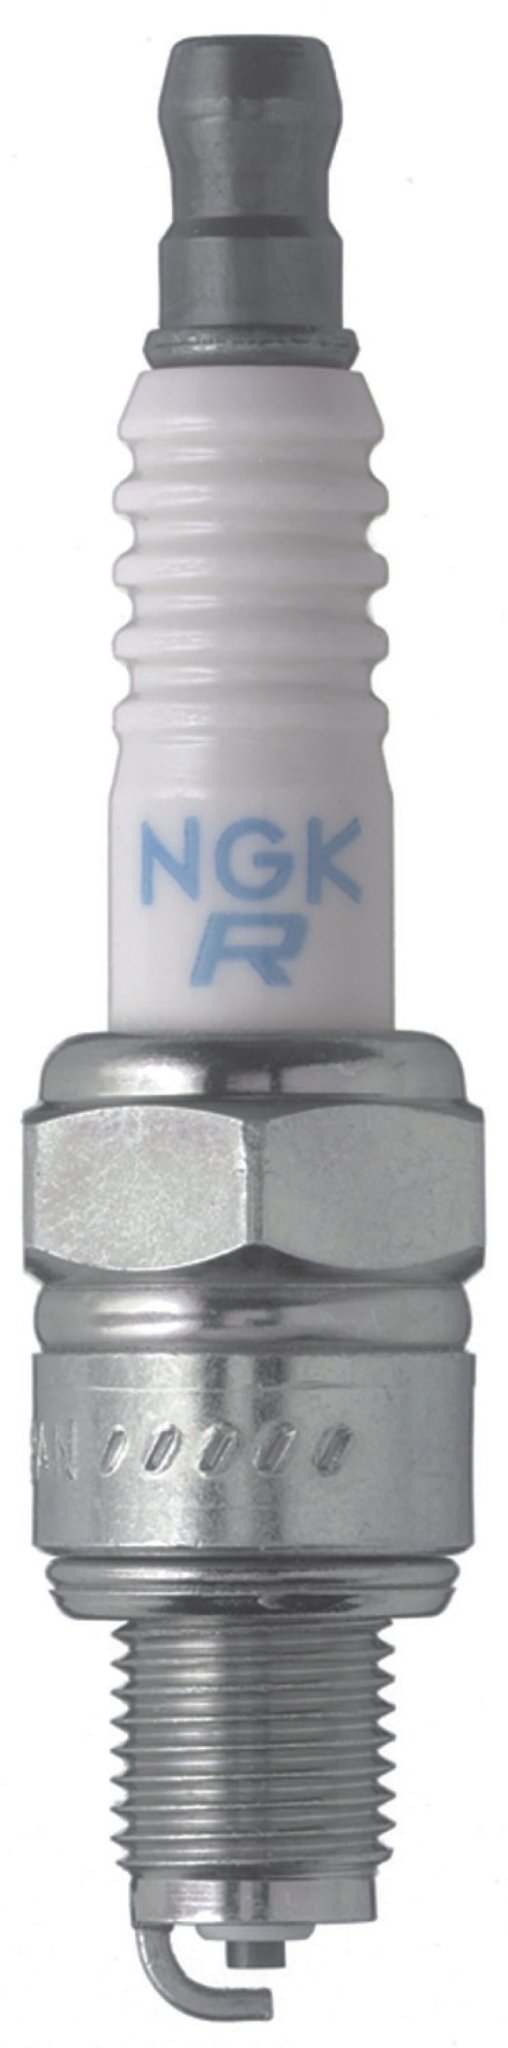 NGK - NGK BLYB Spark Plug Box of 6 (CR5HSB) - Demon Performance